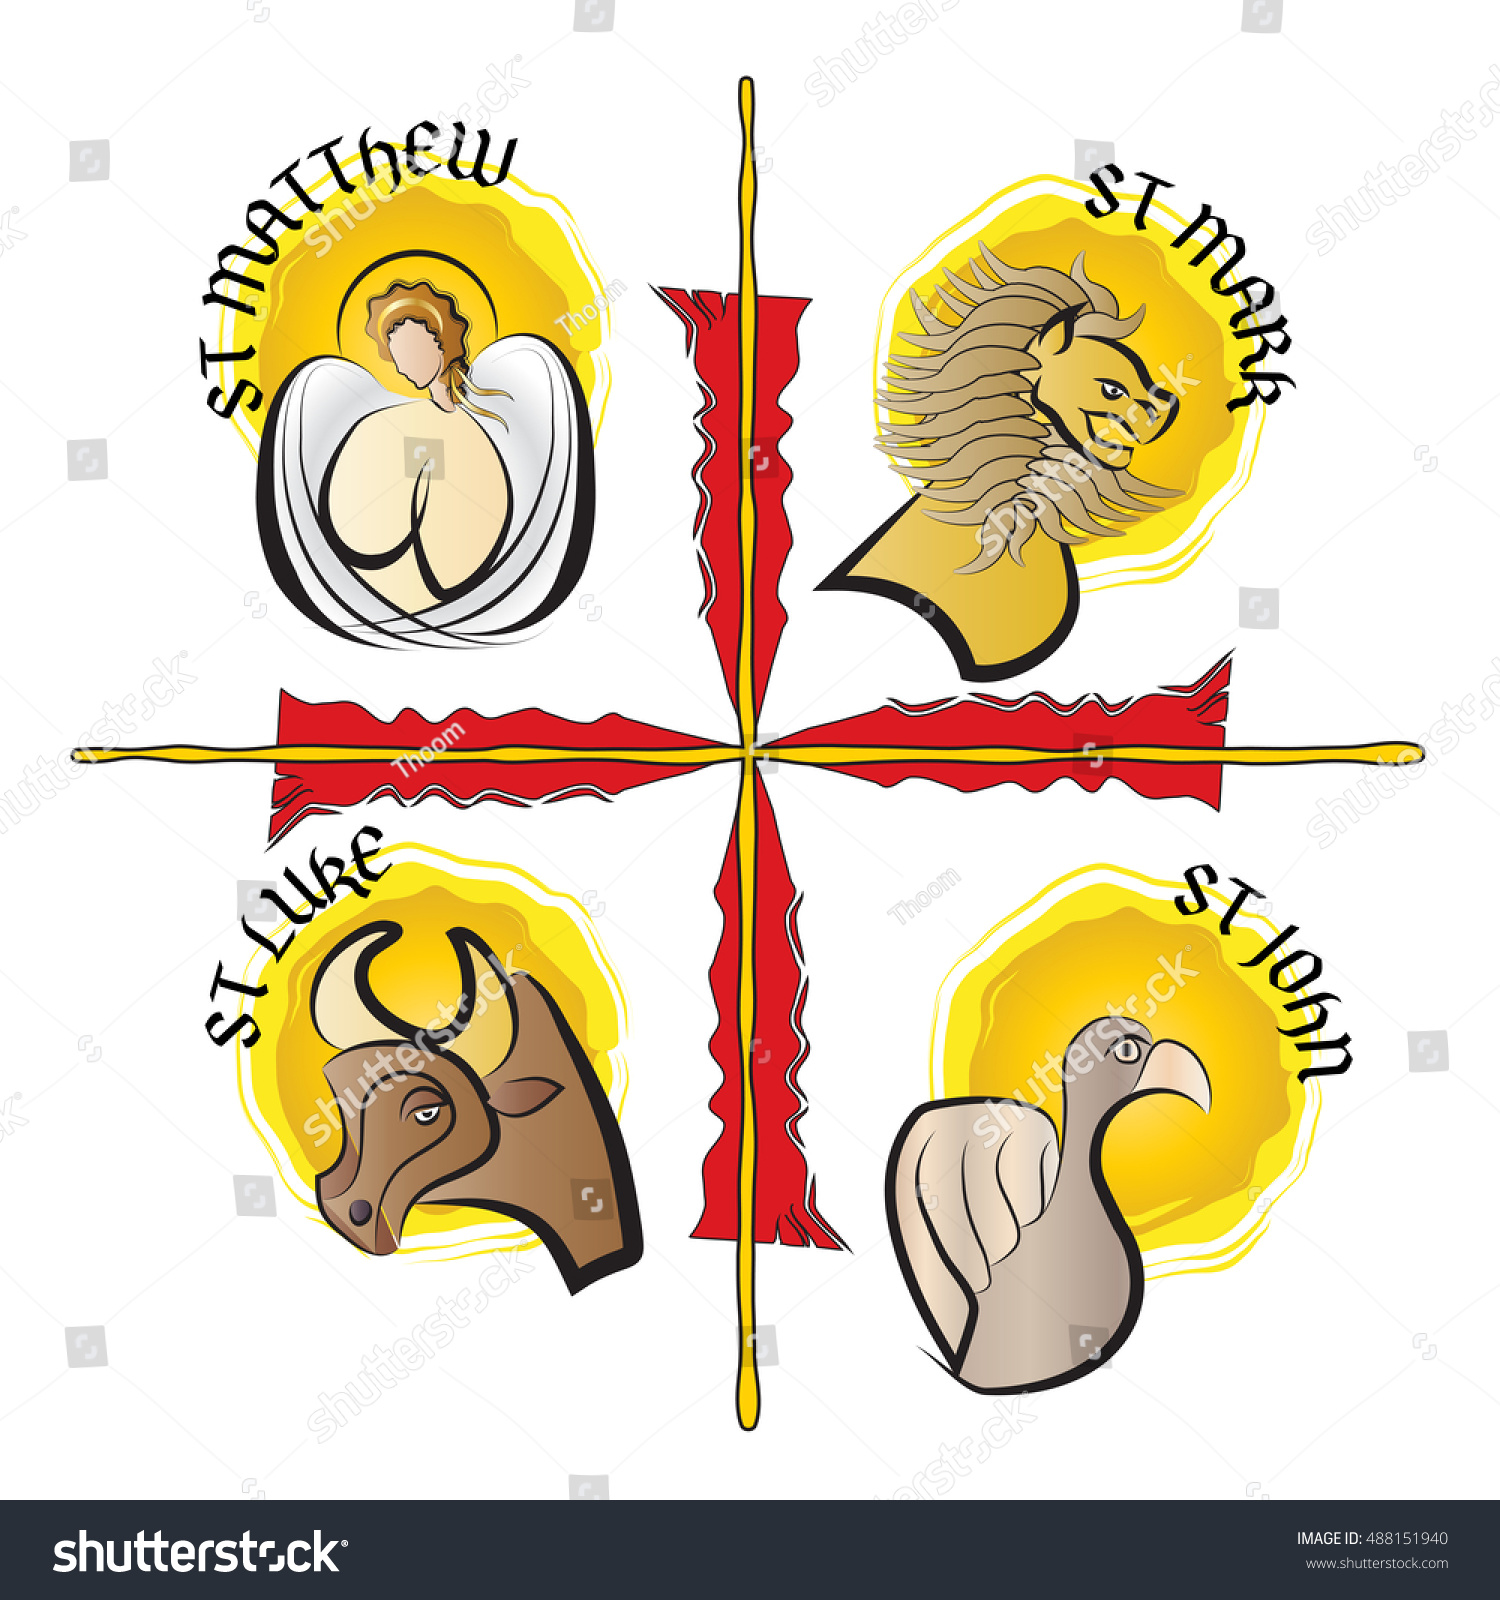 4 Apostles Symbols